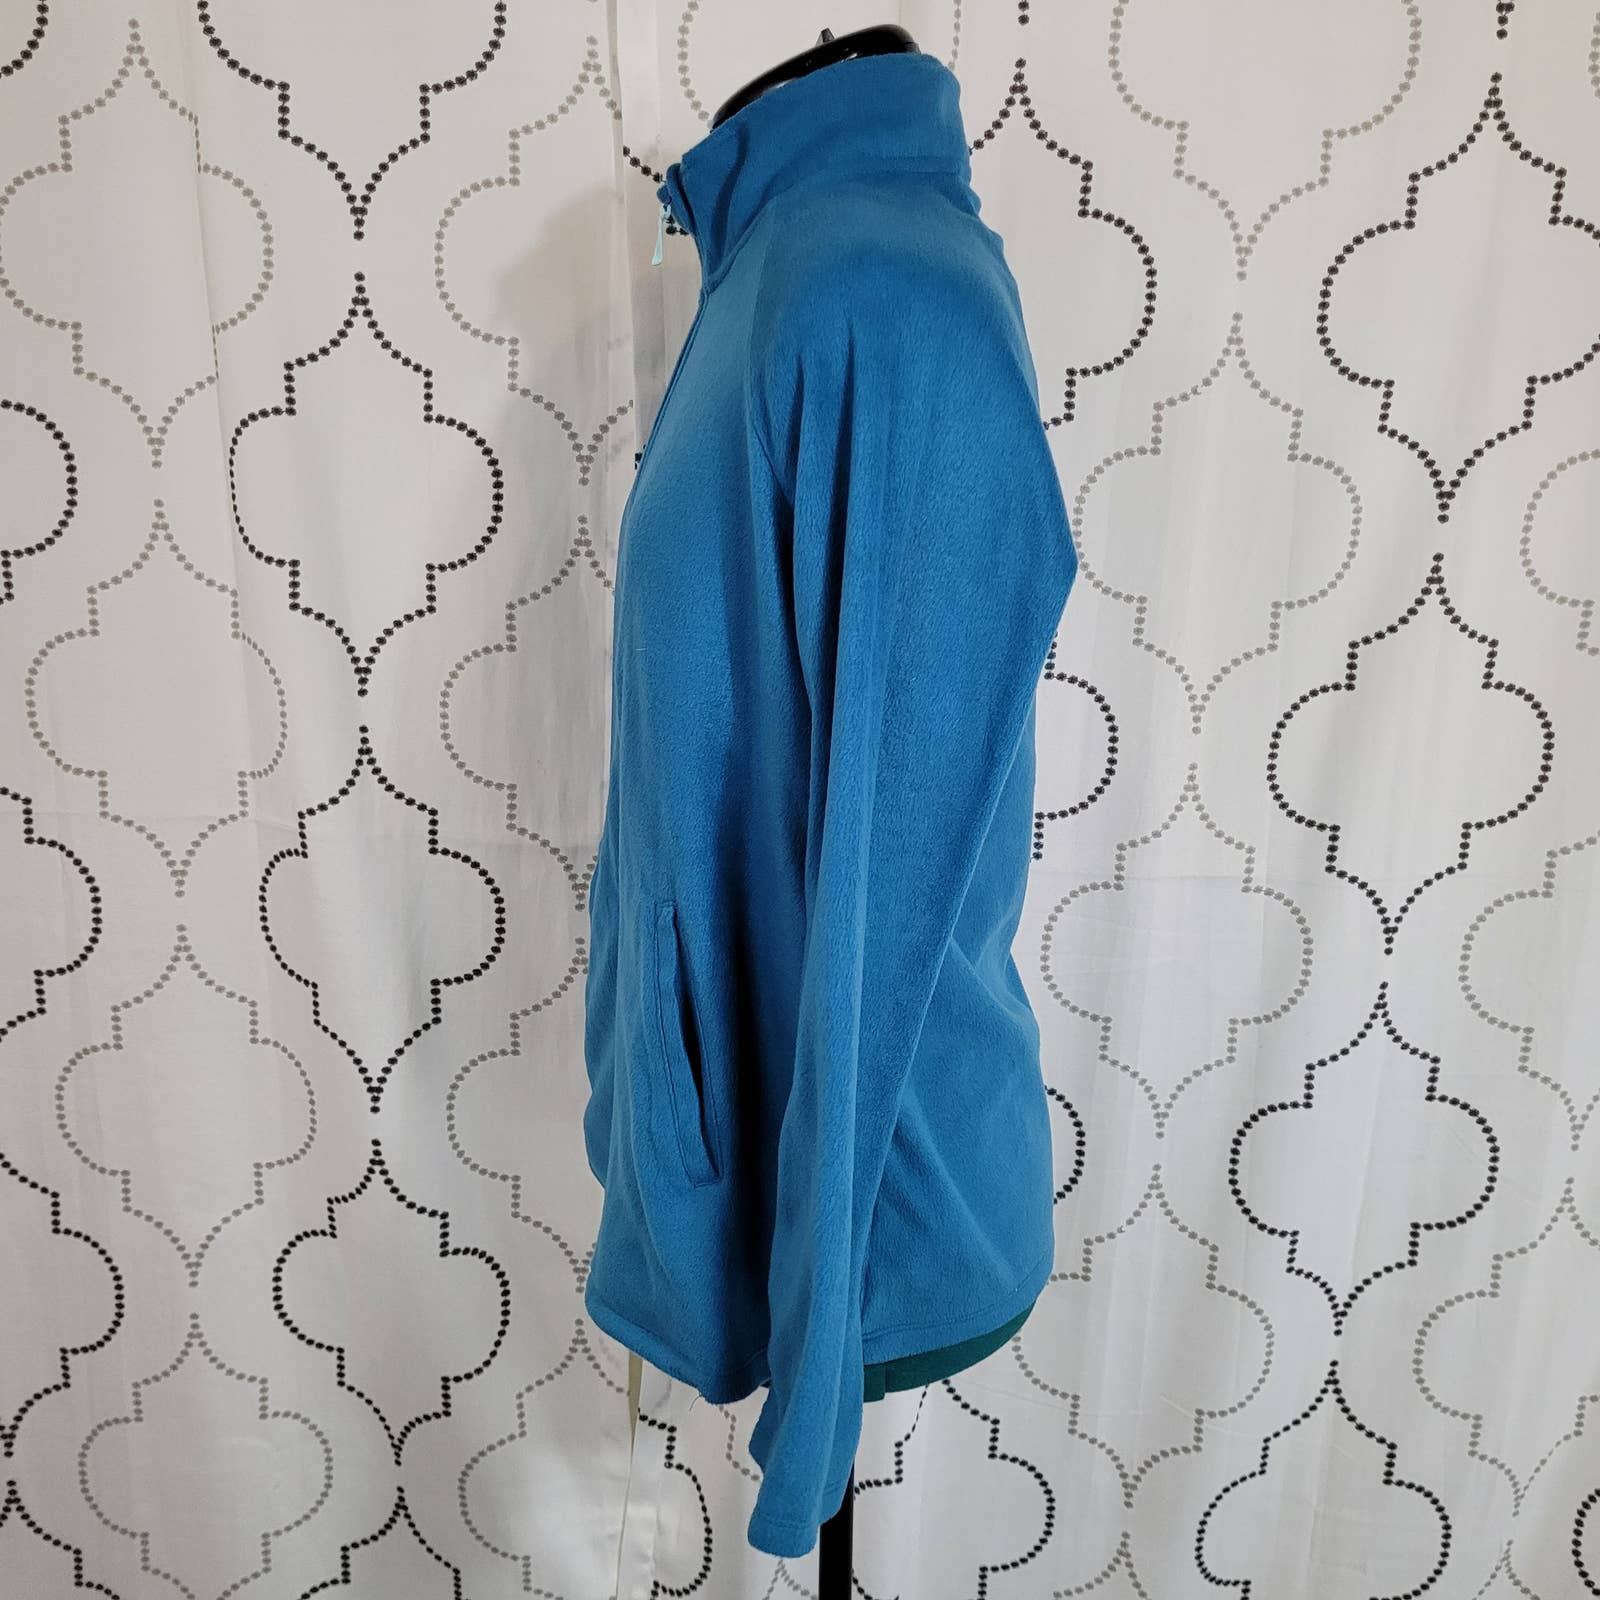 Carole Hochman Blue Fleece Zip Up Sweater - Size SmallMarkita's ClosetCarole Hochman